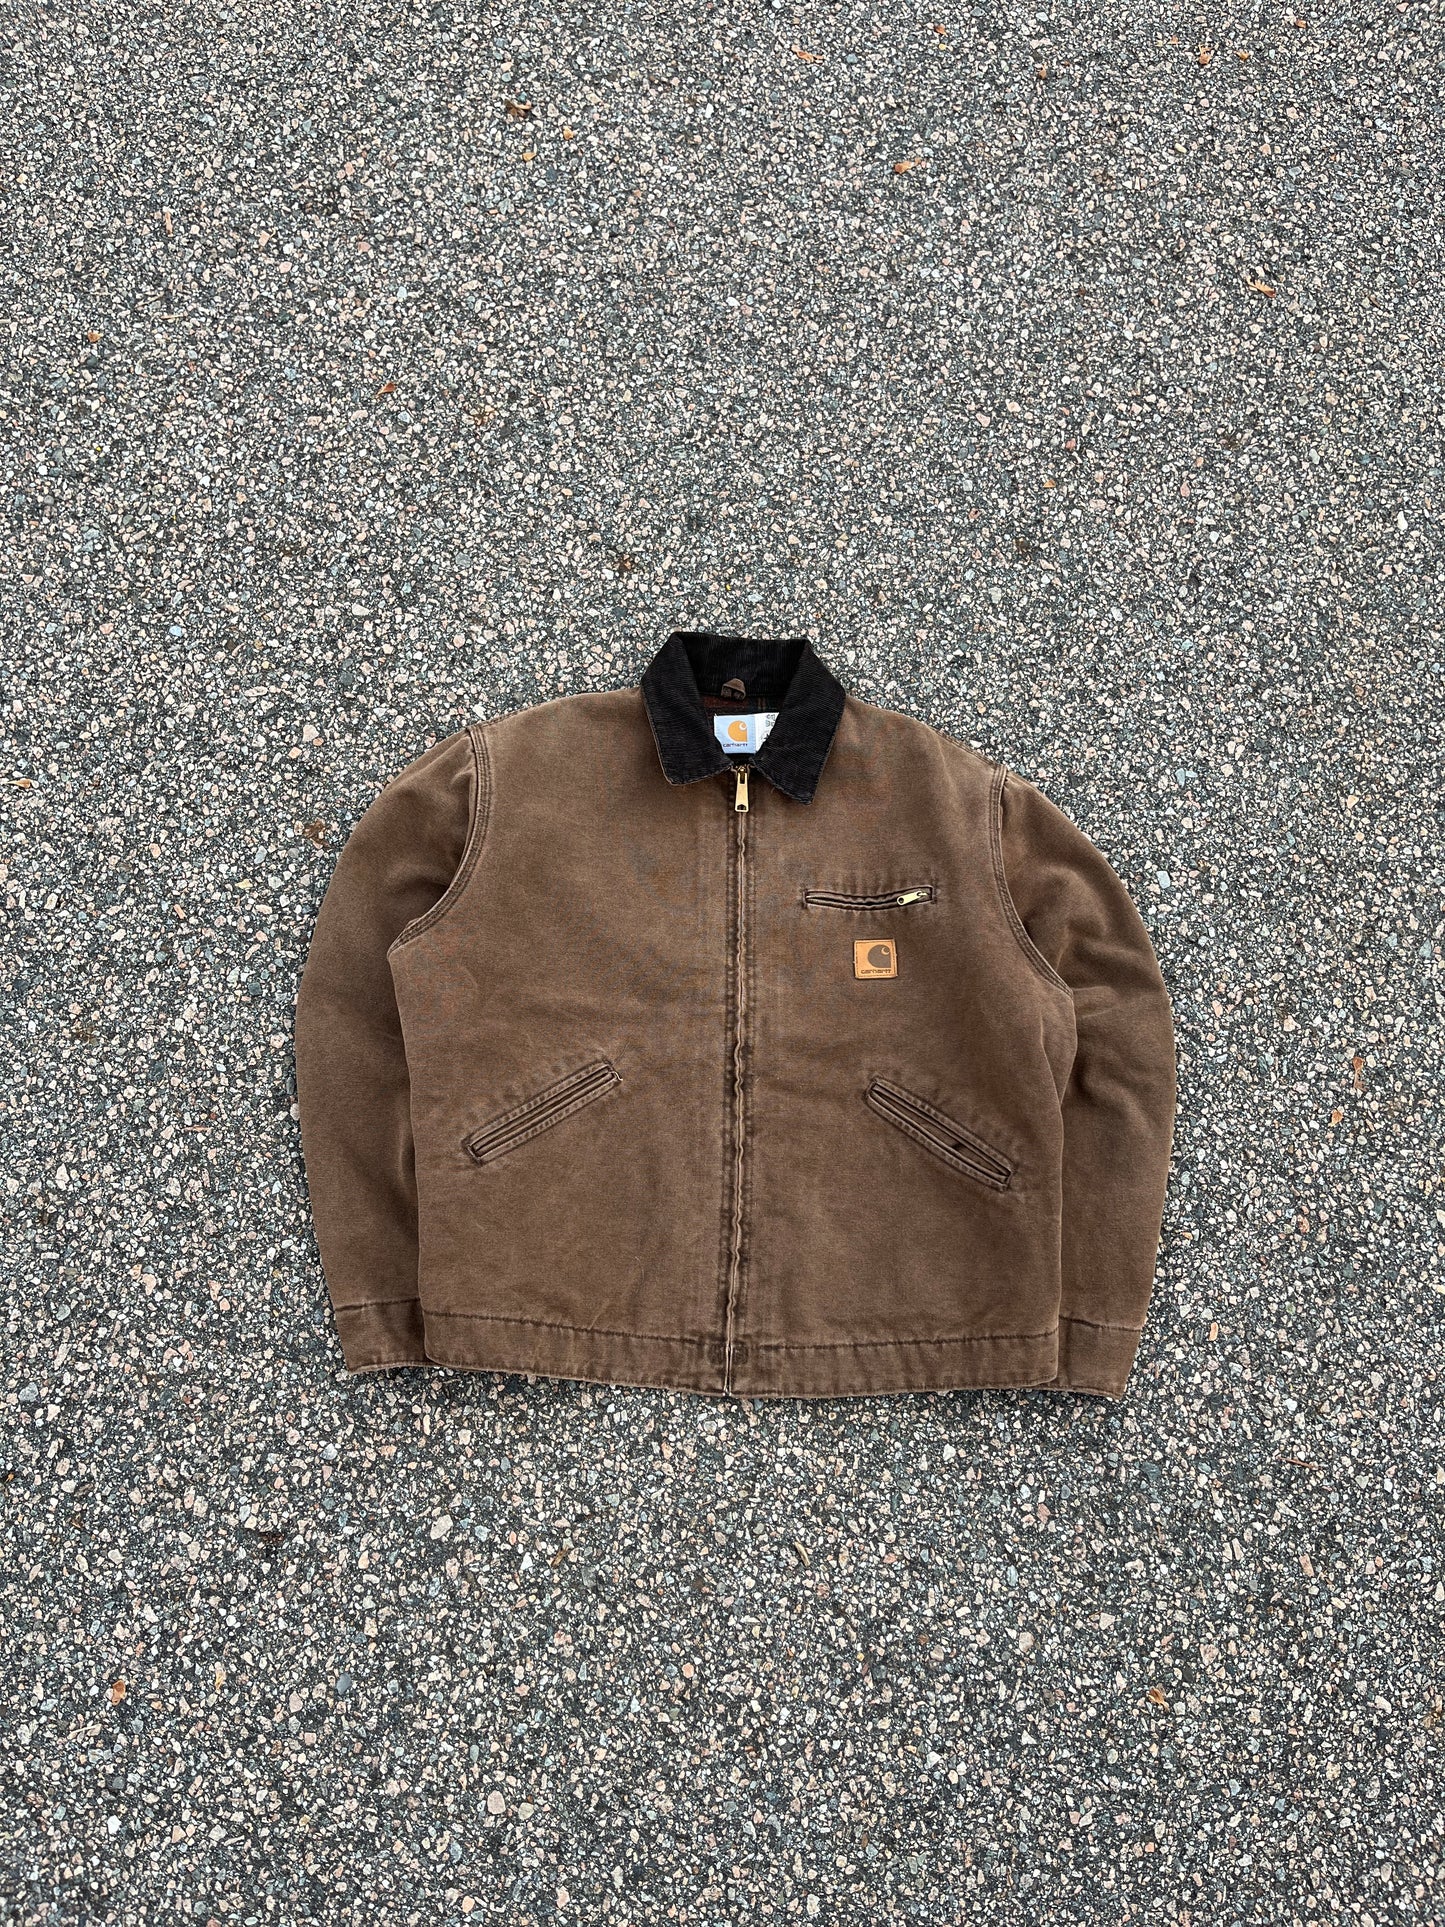 Faded Chestnut Brown Carhartt Detroit Jacket - Boxy M-L